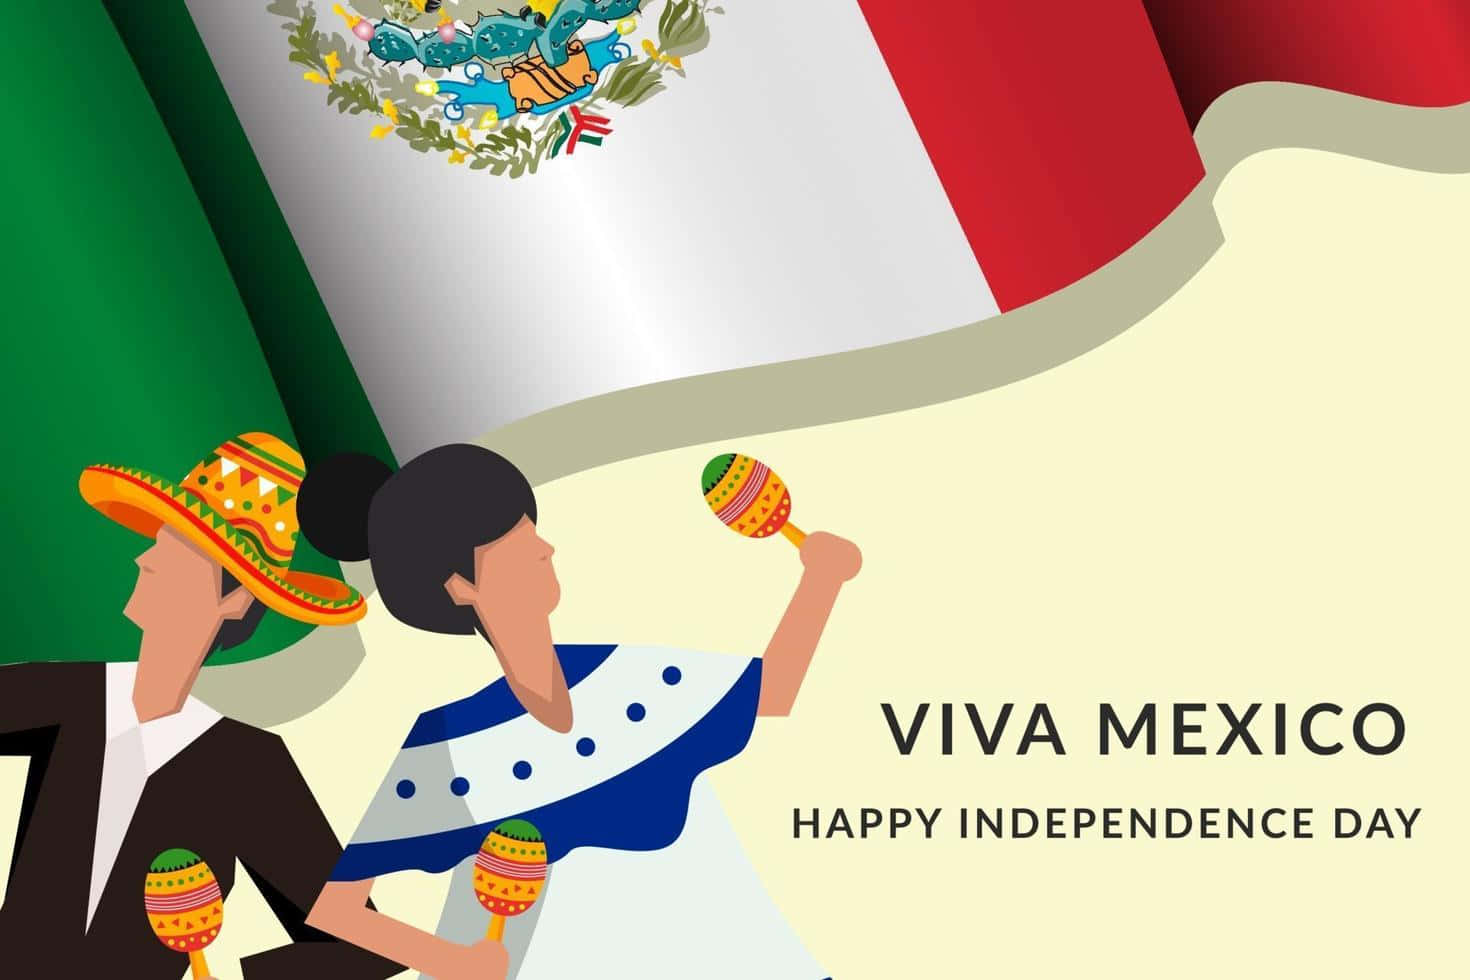 Let's Celebrate Mexico!